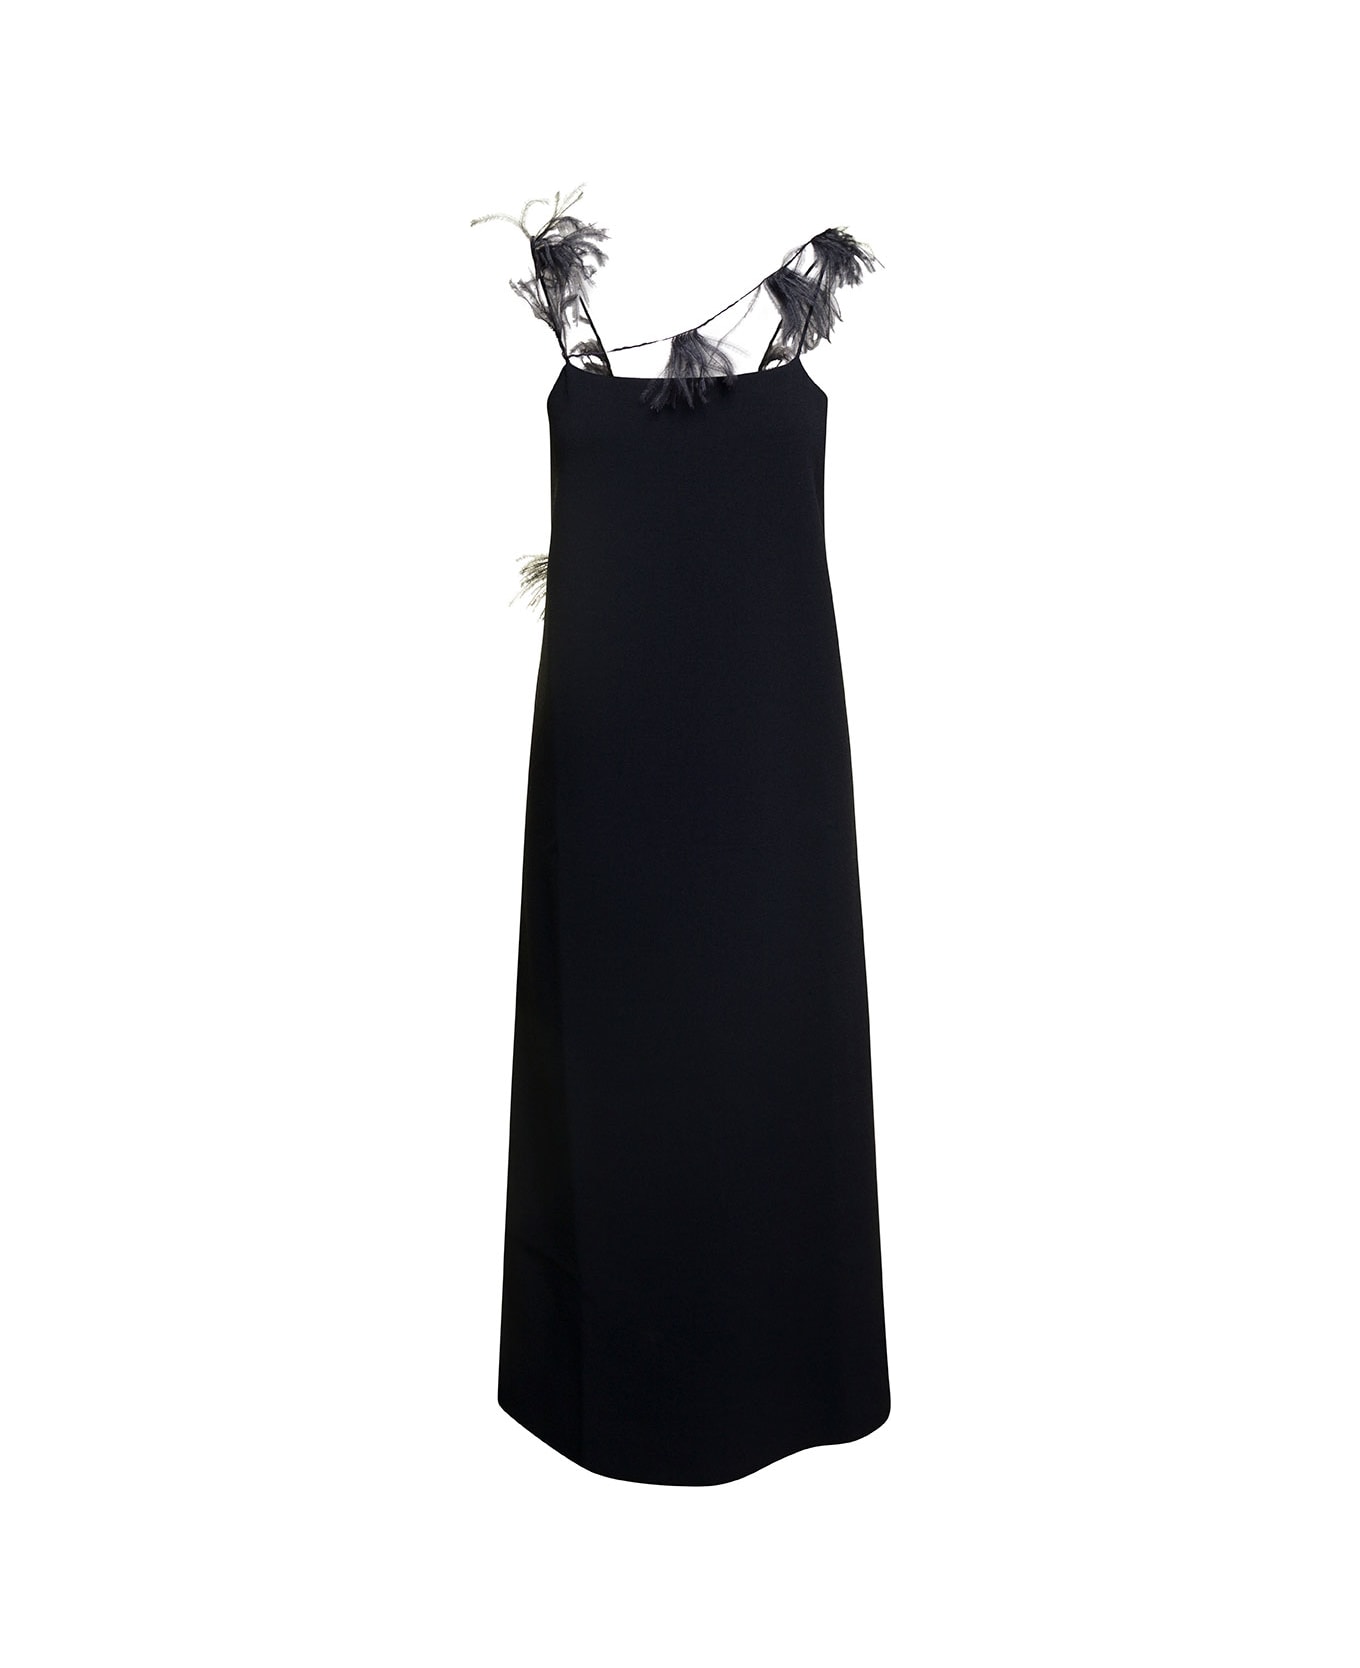 Jil Sander Midi Black Ribbed Dress With Feathers Embellishment Woman - Black